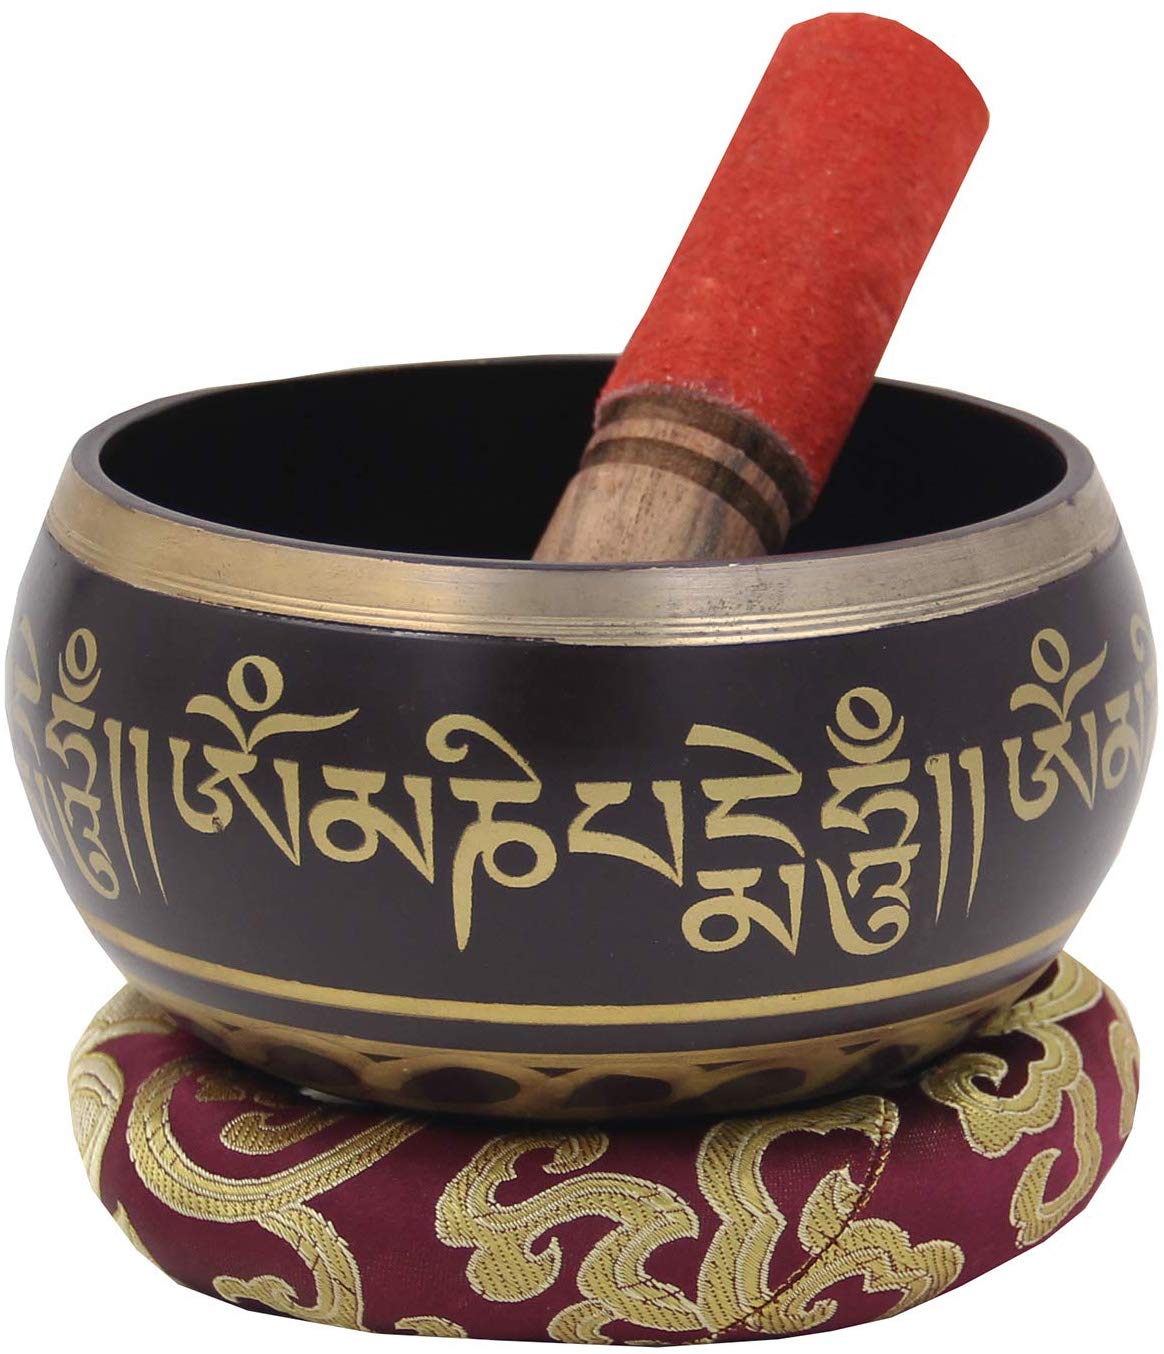 Large ~ Tibetan OM MANI Singing Bowl Set ~ With Mallet, Brocade Cushion & Carry Bag ~ For Meditation, Chakra Healing, Prayer, Yoga (Purple) - DharmaObjects